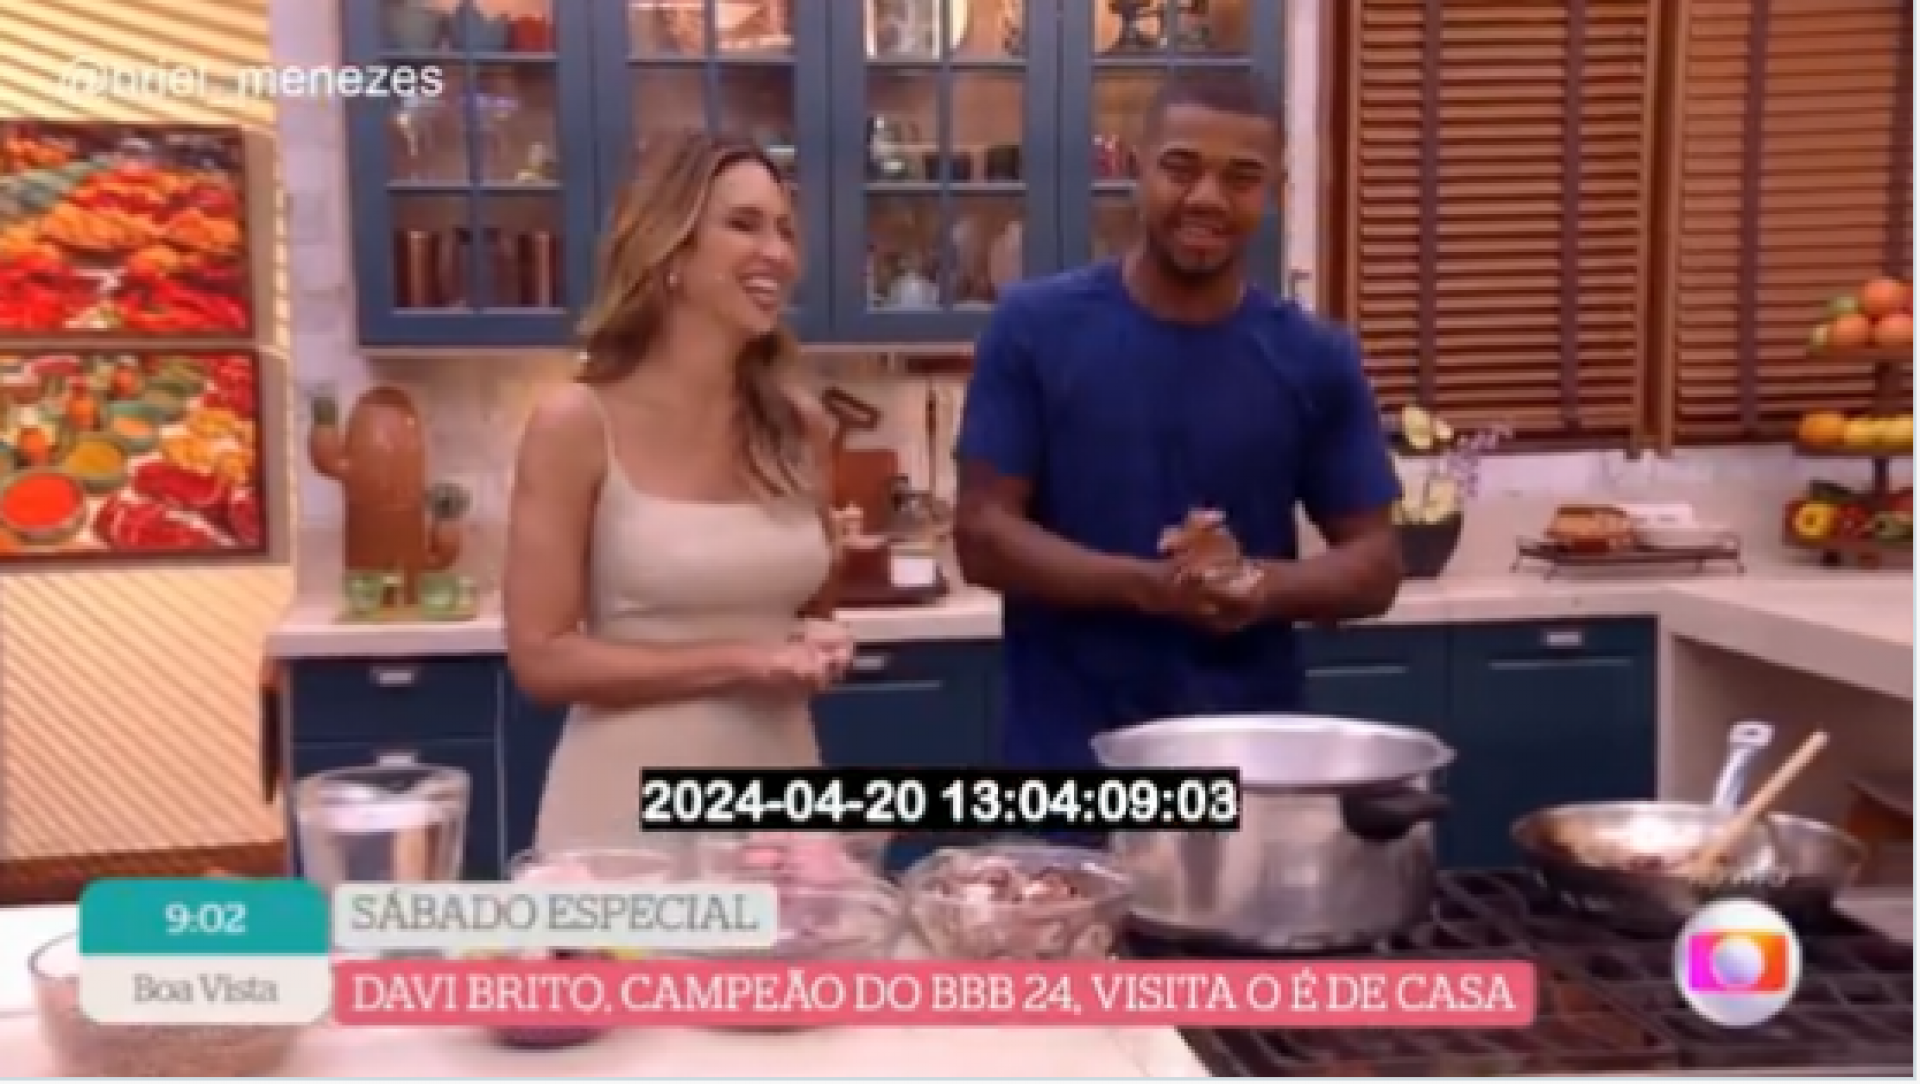 Davi, champion of 'BBB 24', on the program 'É de Casa', on TV Globo - Video reproduction